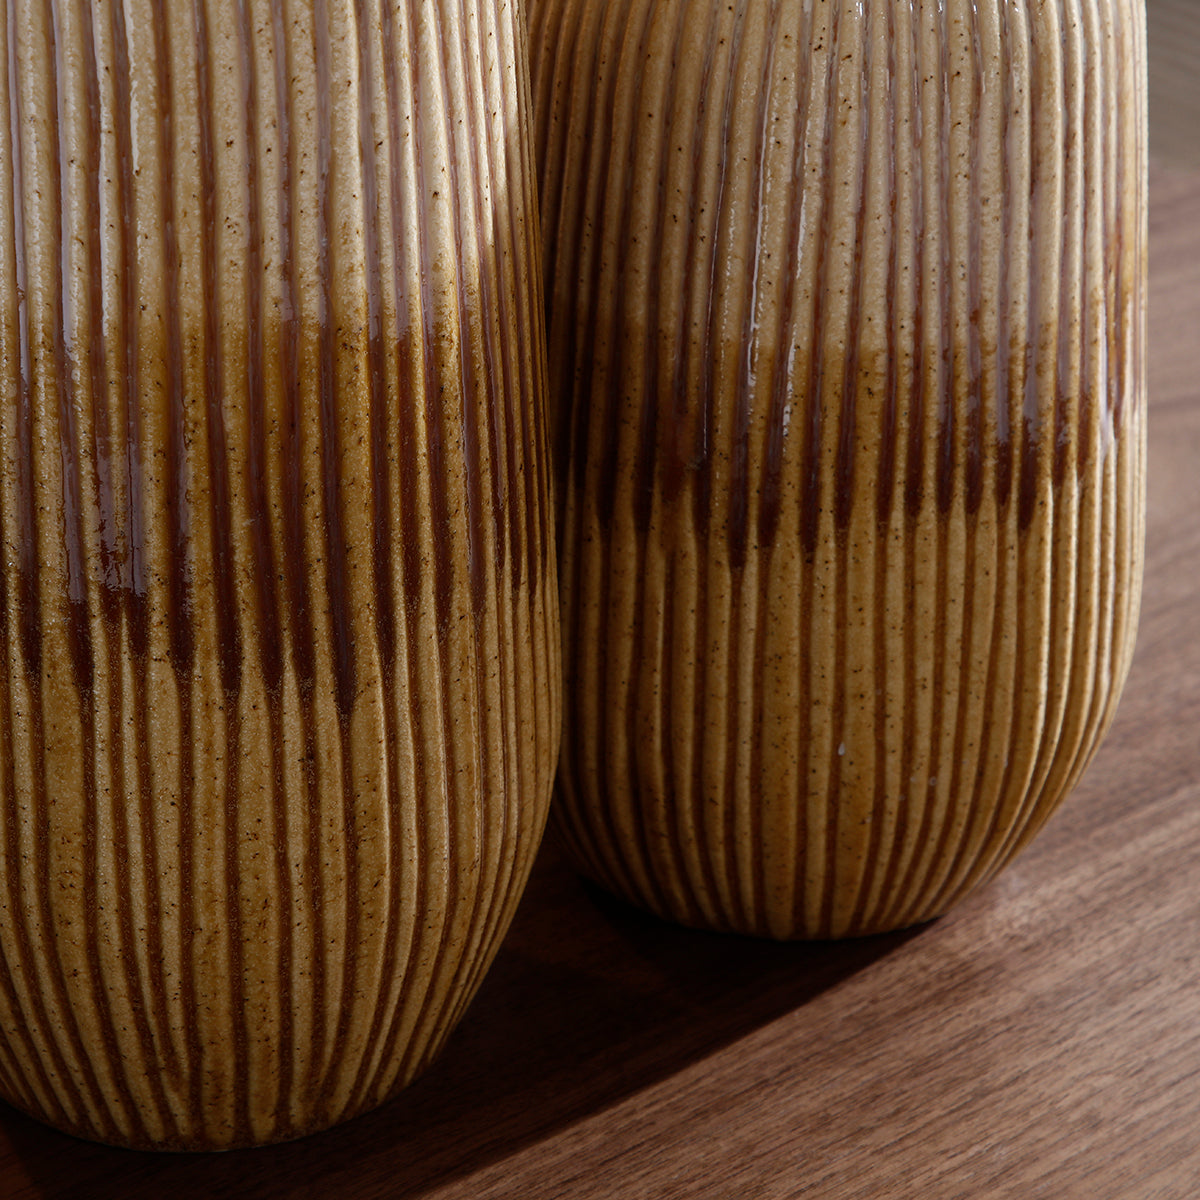 Vase Organic Moyen Format